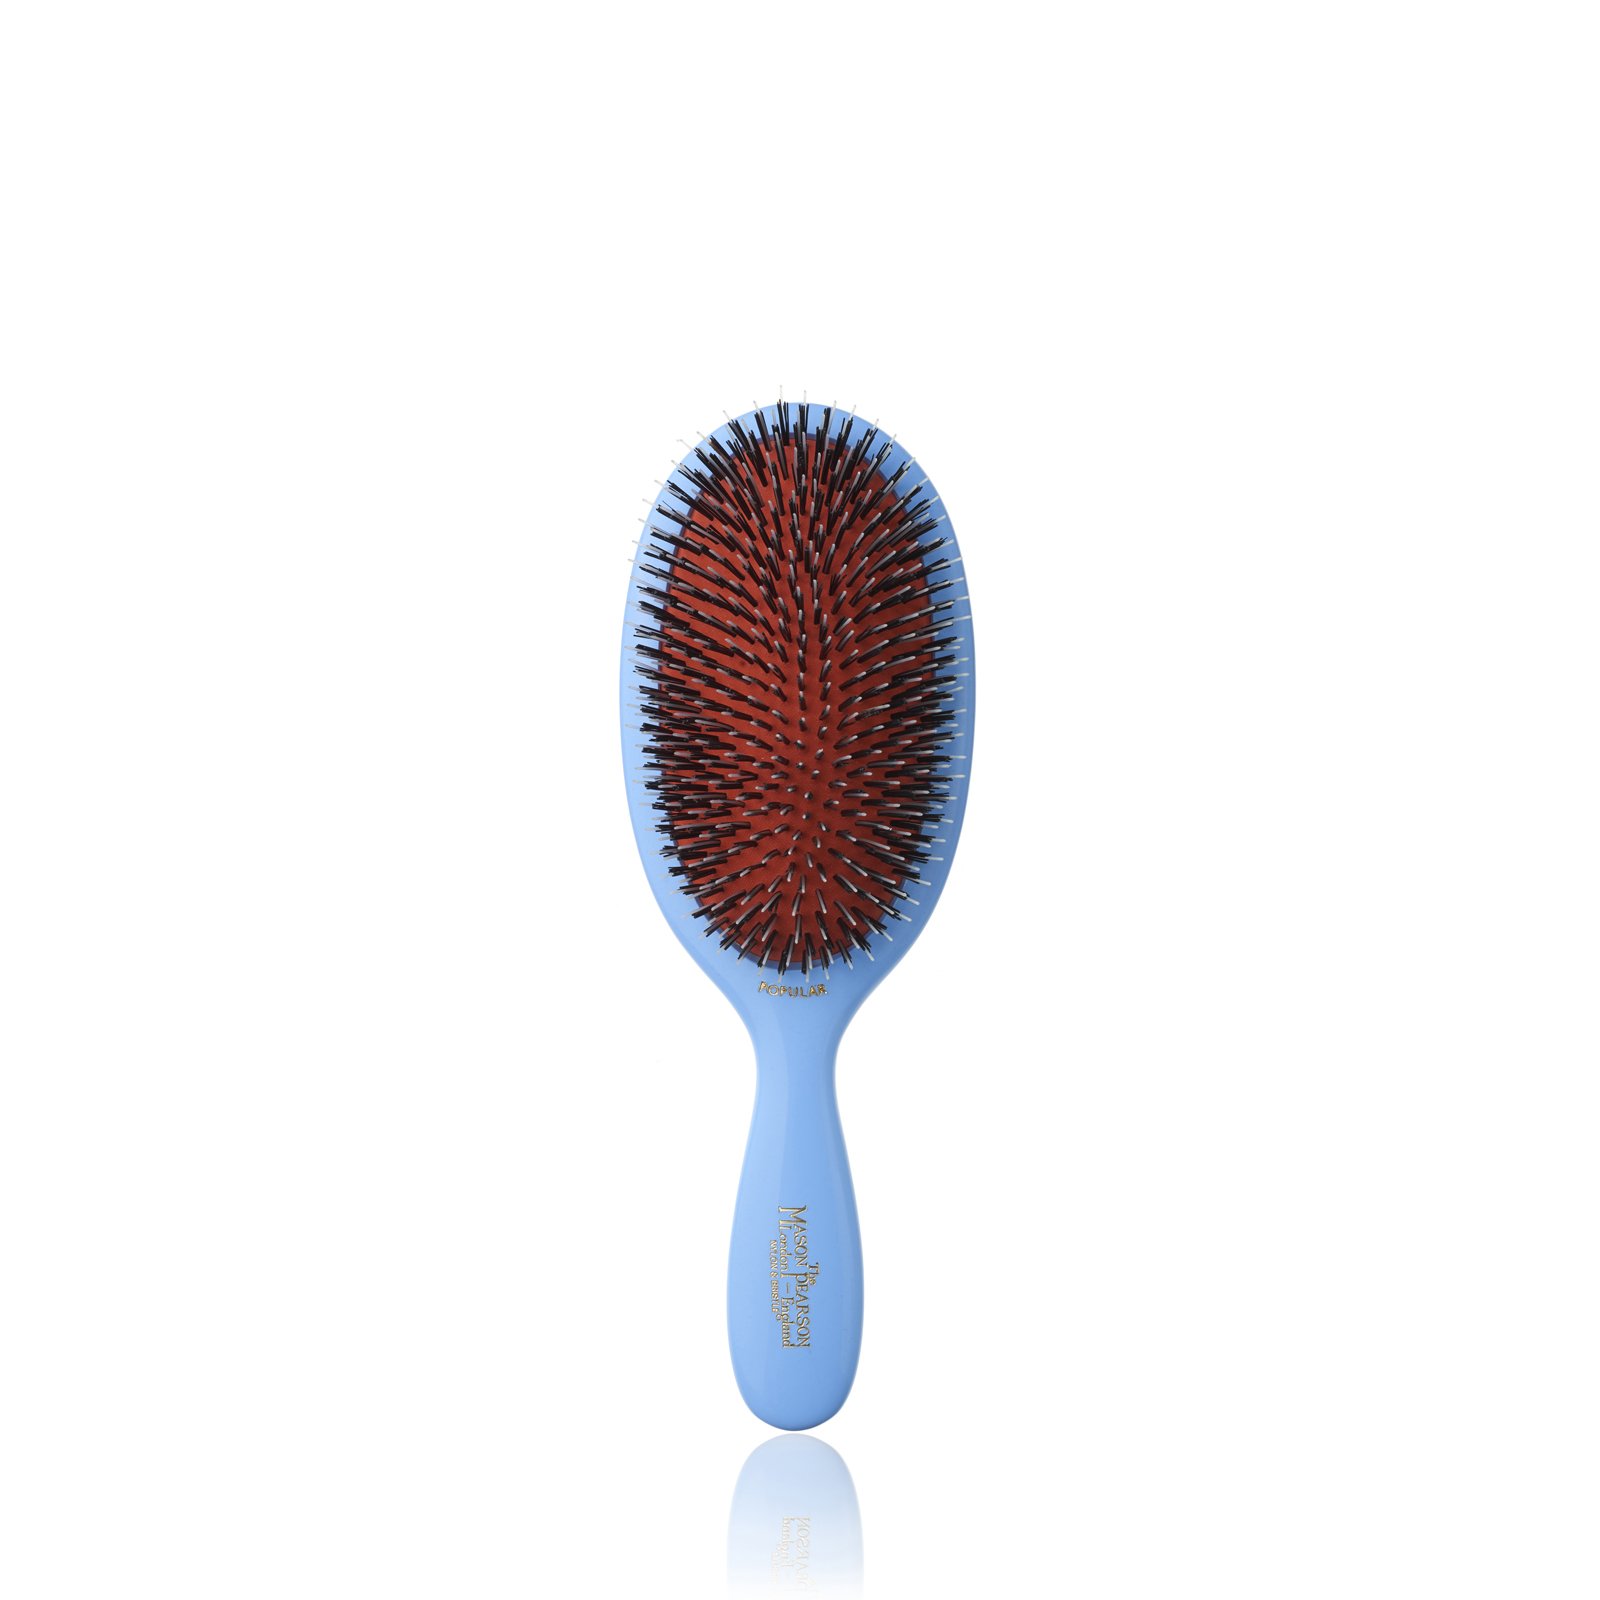 BN1 Popular Hairbrush from Mason Pearson (Blue) 